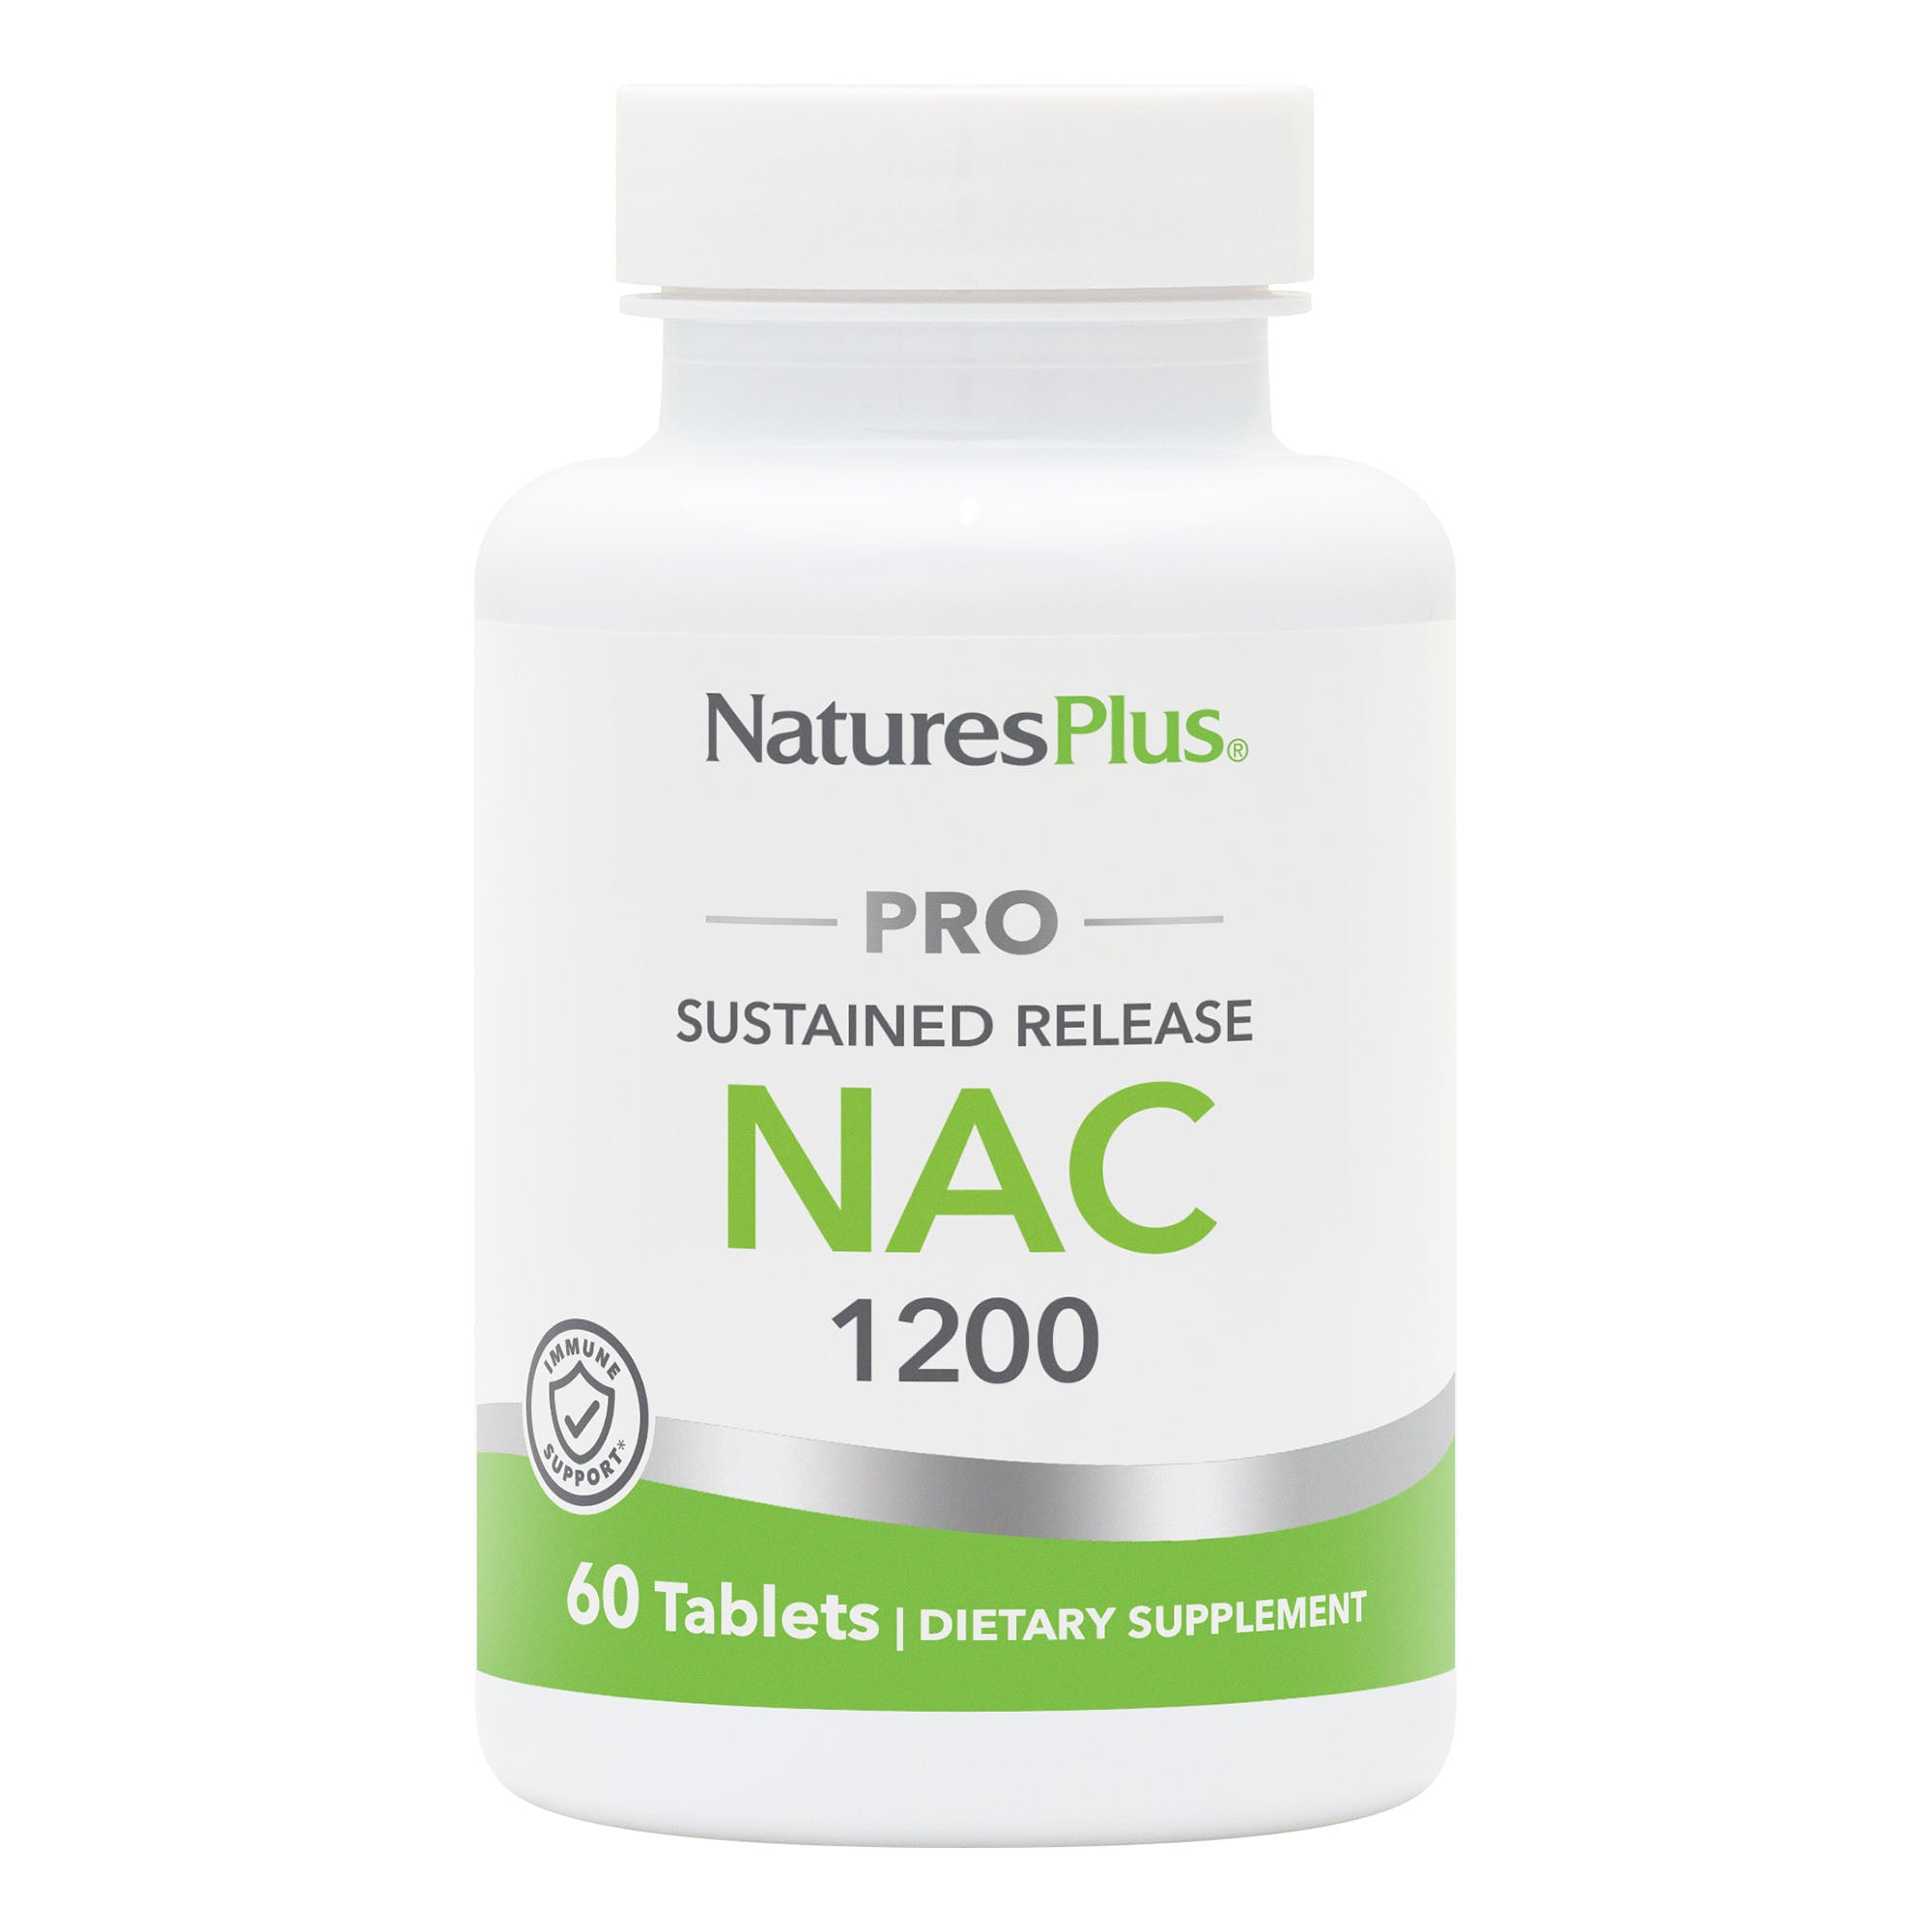 NaturesPlus PRO NAC 1200 Tablets